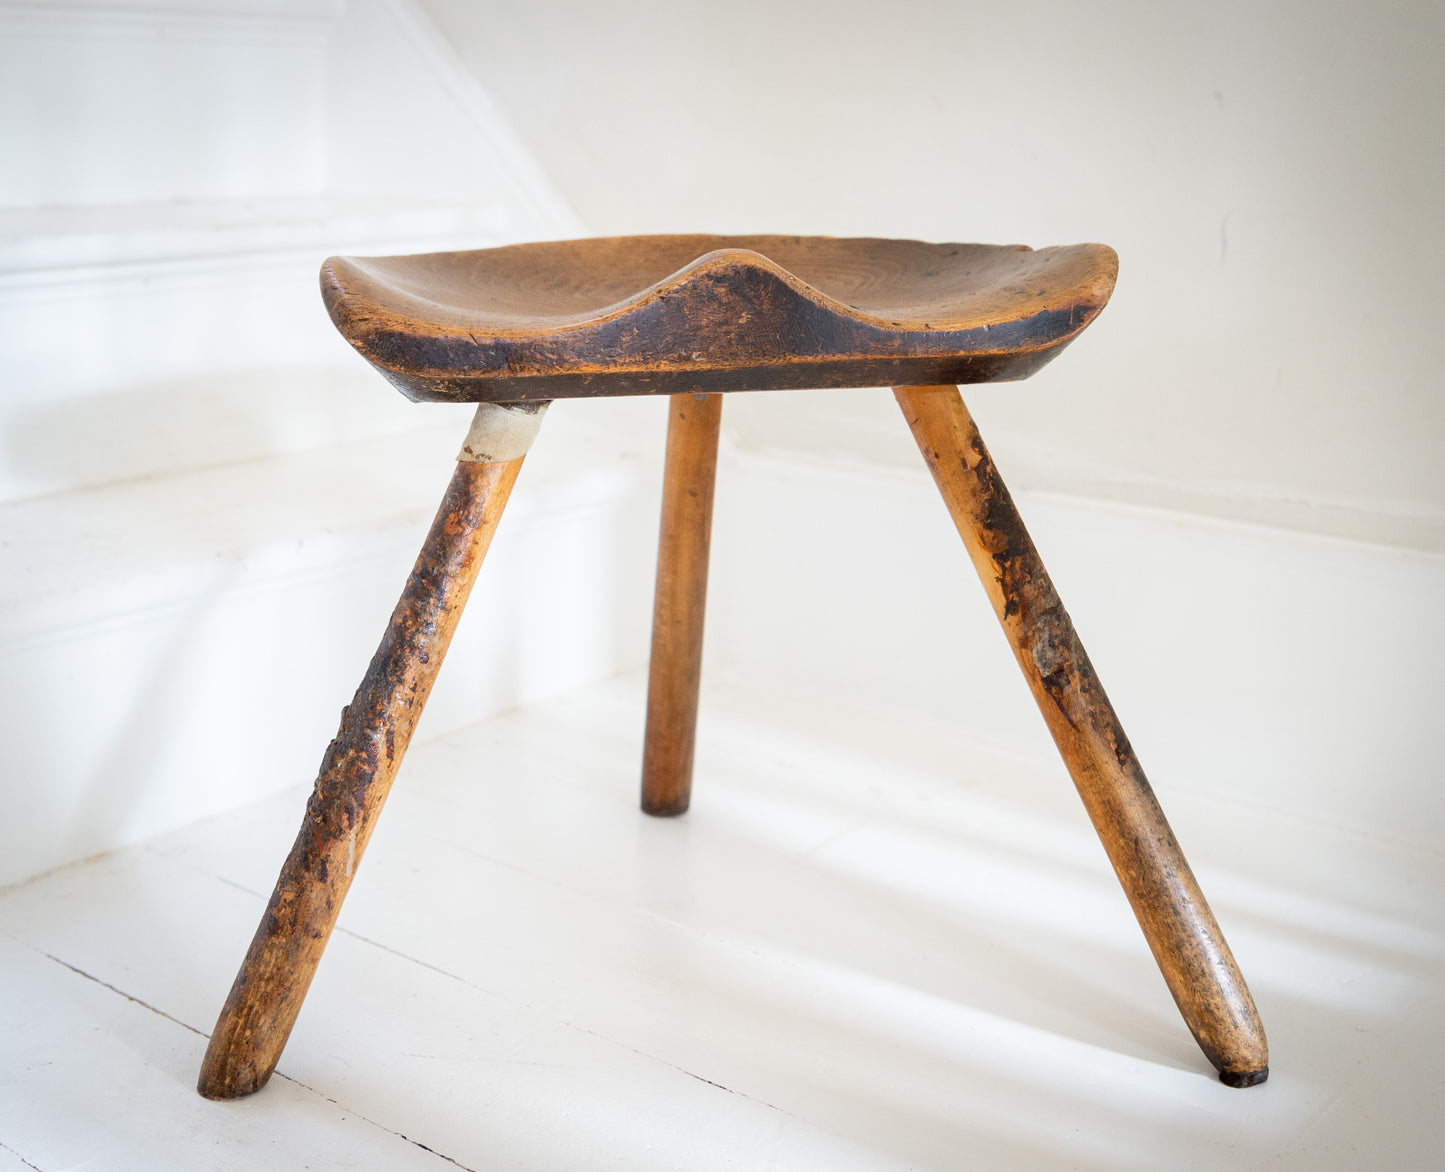 Heavily patinated wonderful elm stool